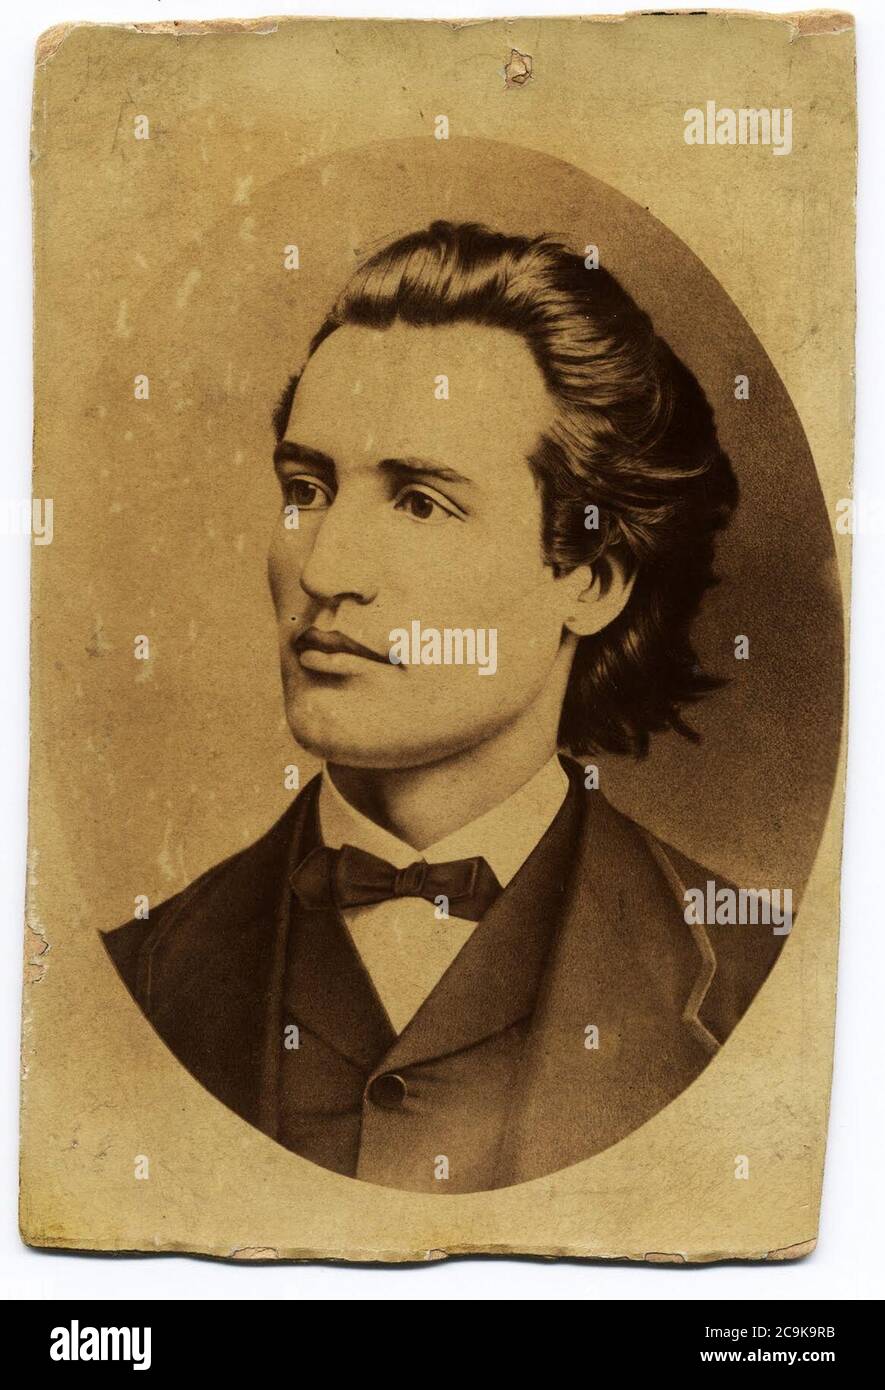 Jan Tomas - Mihai Eminescu 1869. Stock Photo